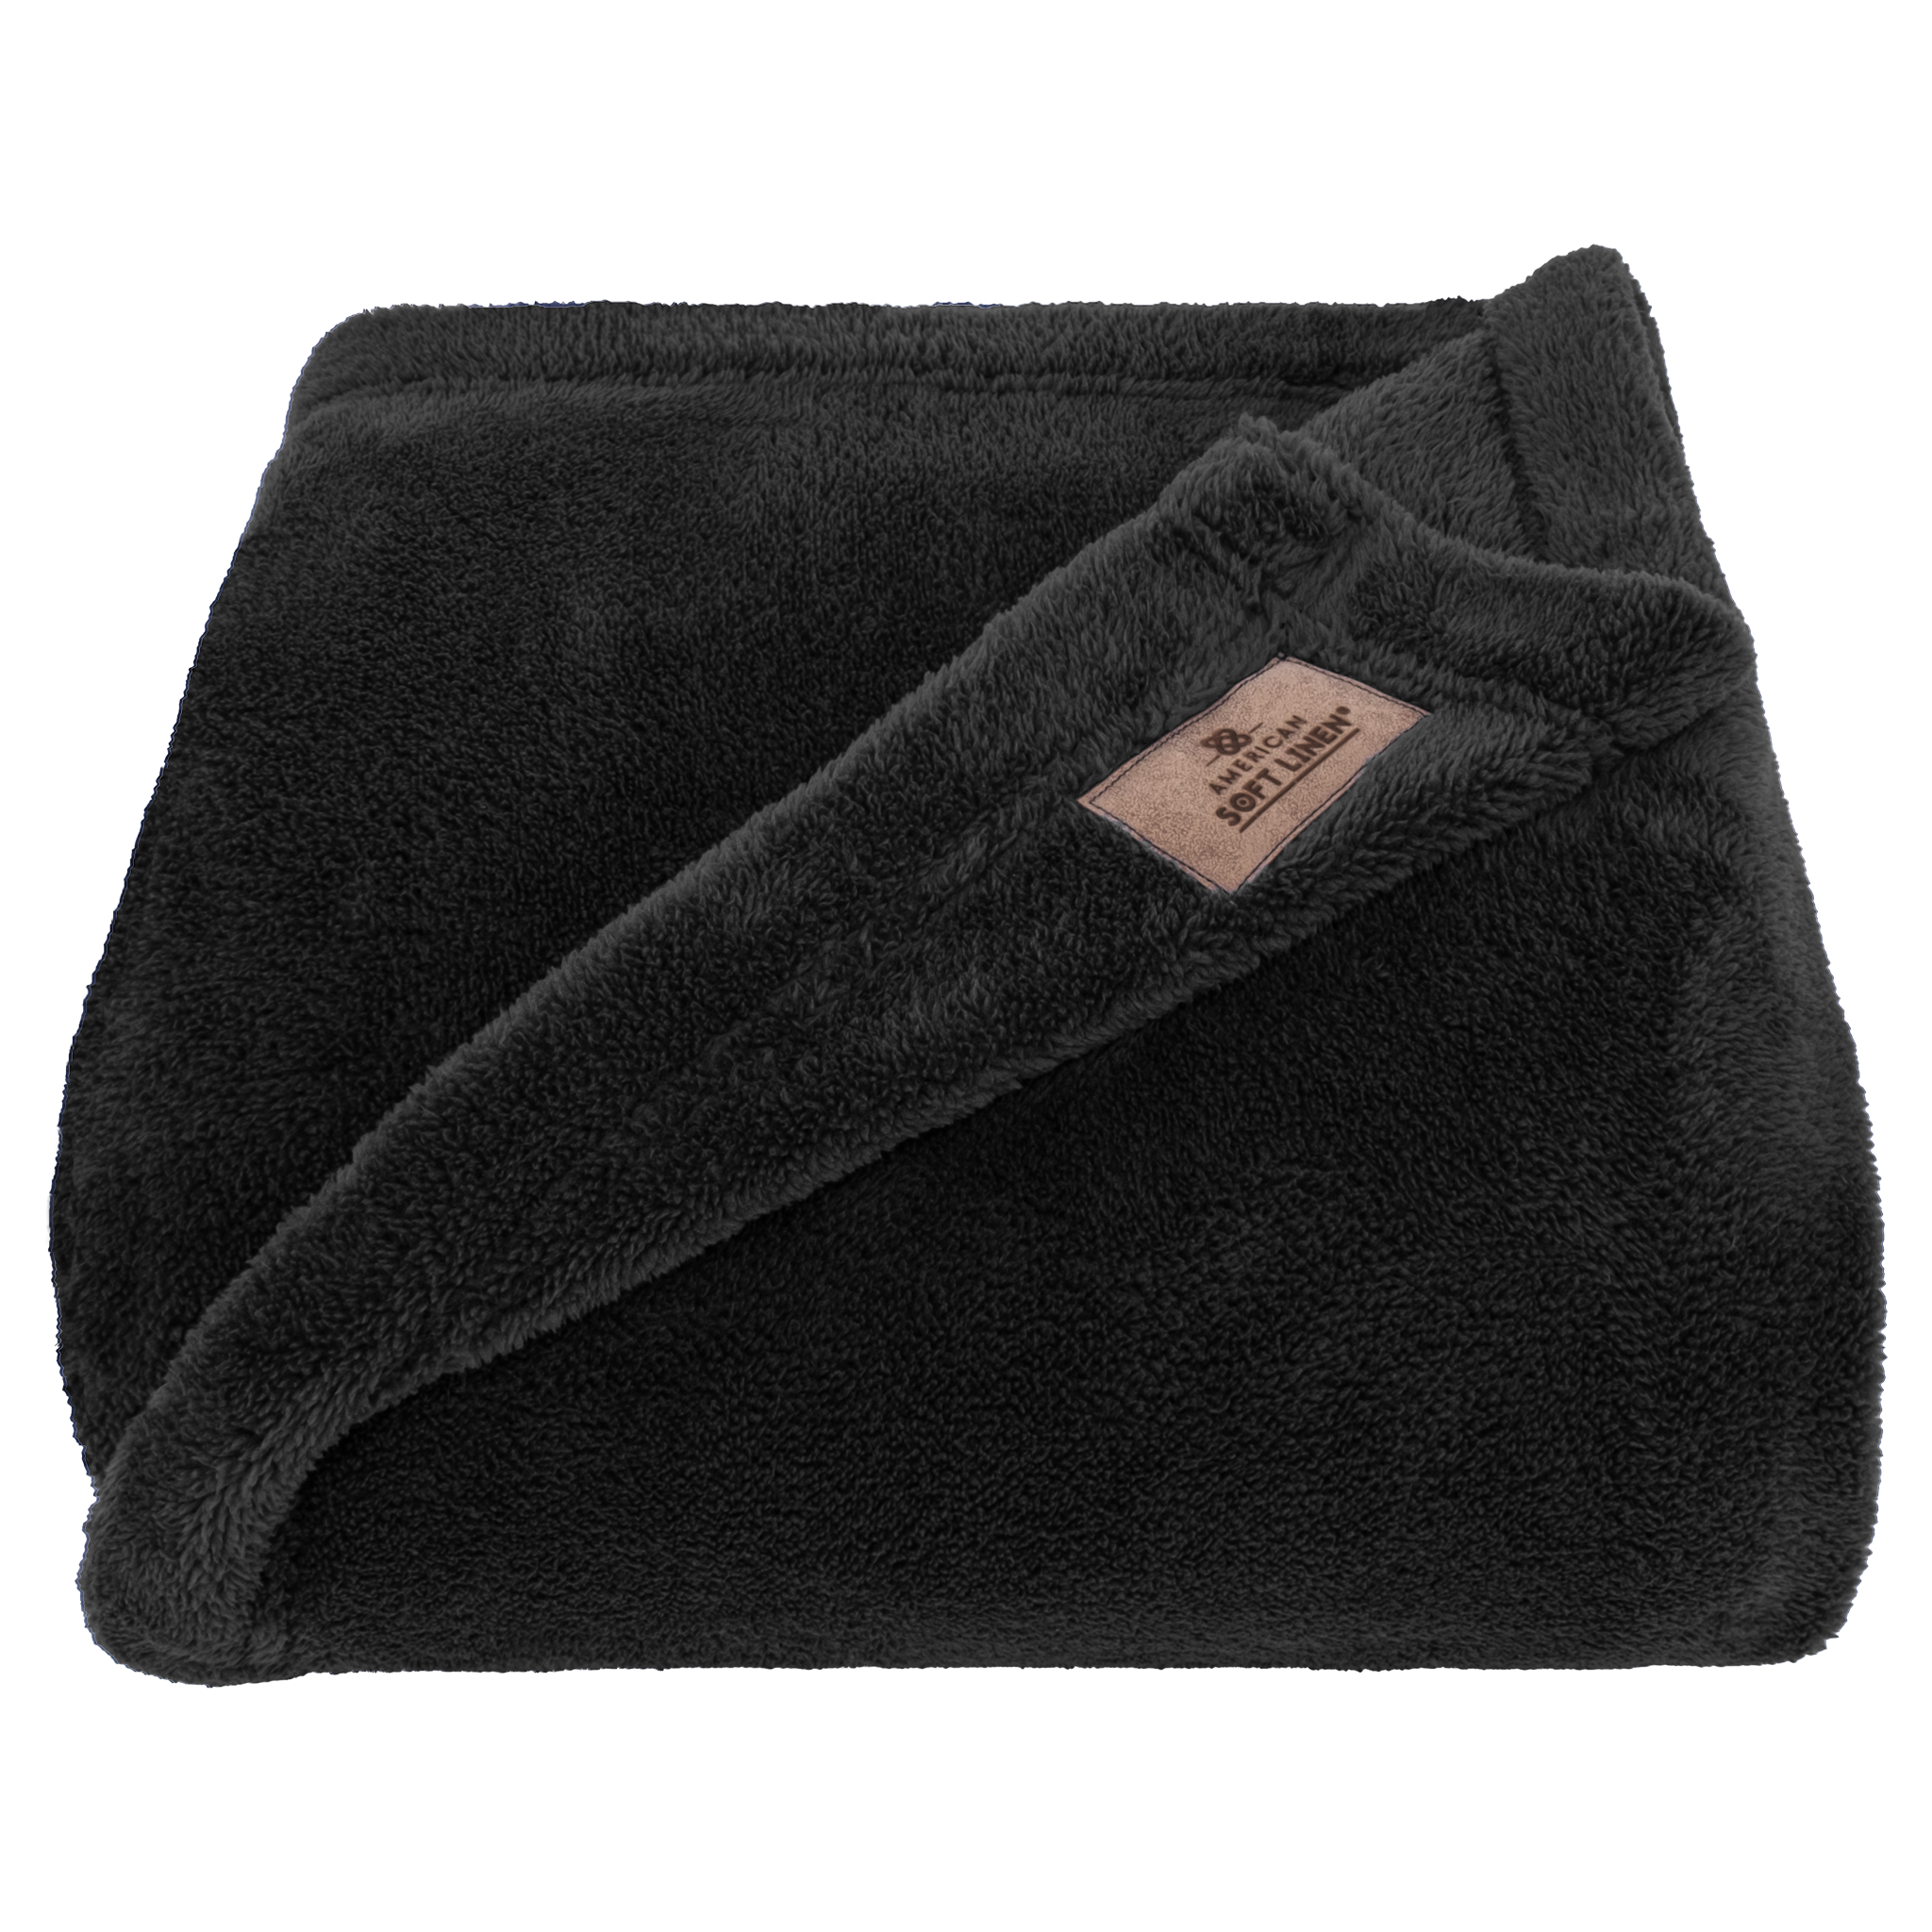 American Soft Linen - Bedding Fleece Blanket - Twin Size 60x80 inches - Black - 3